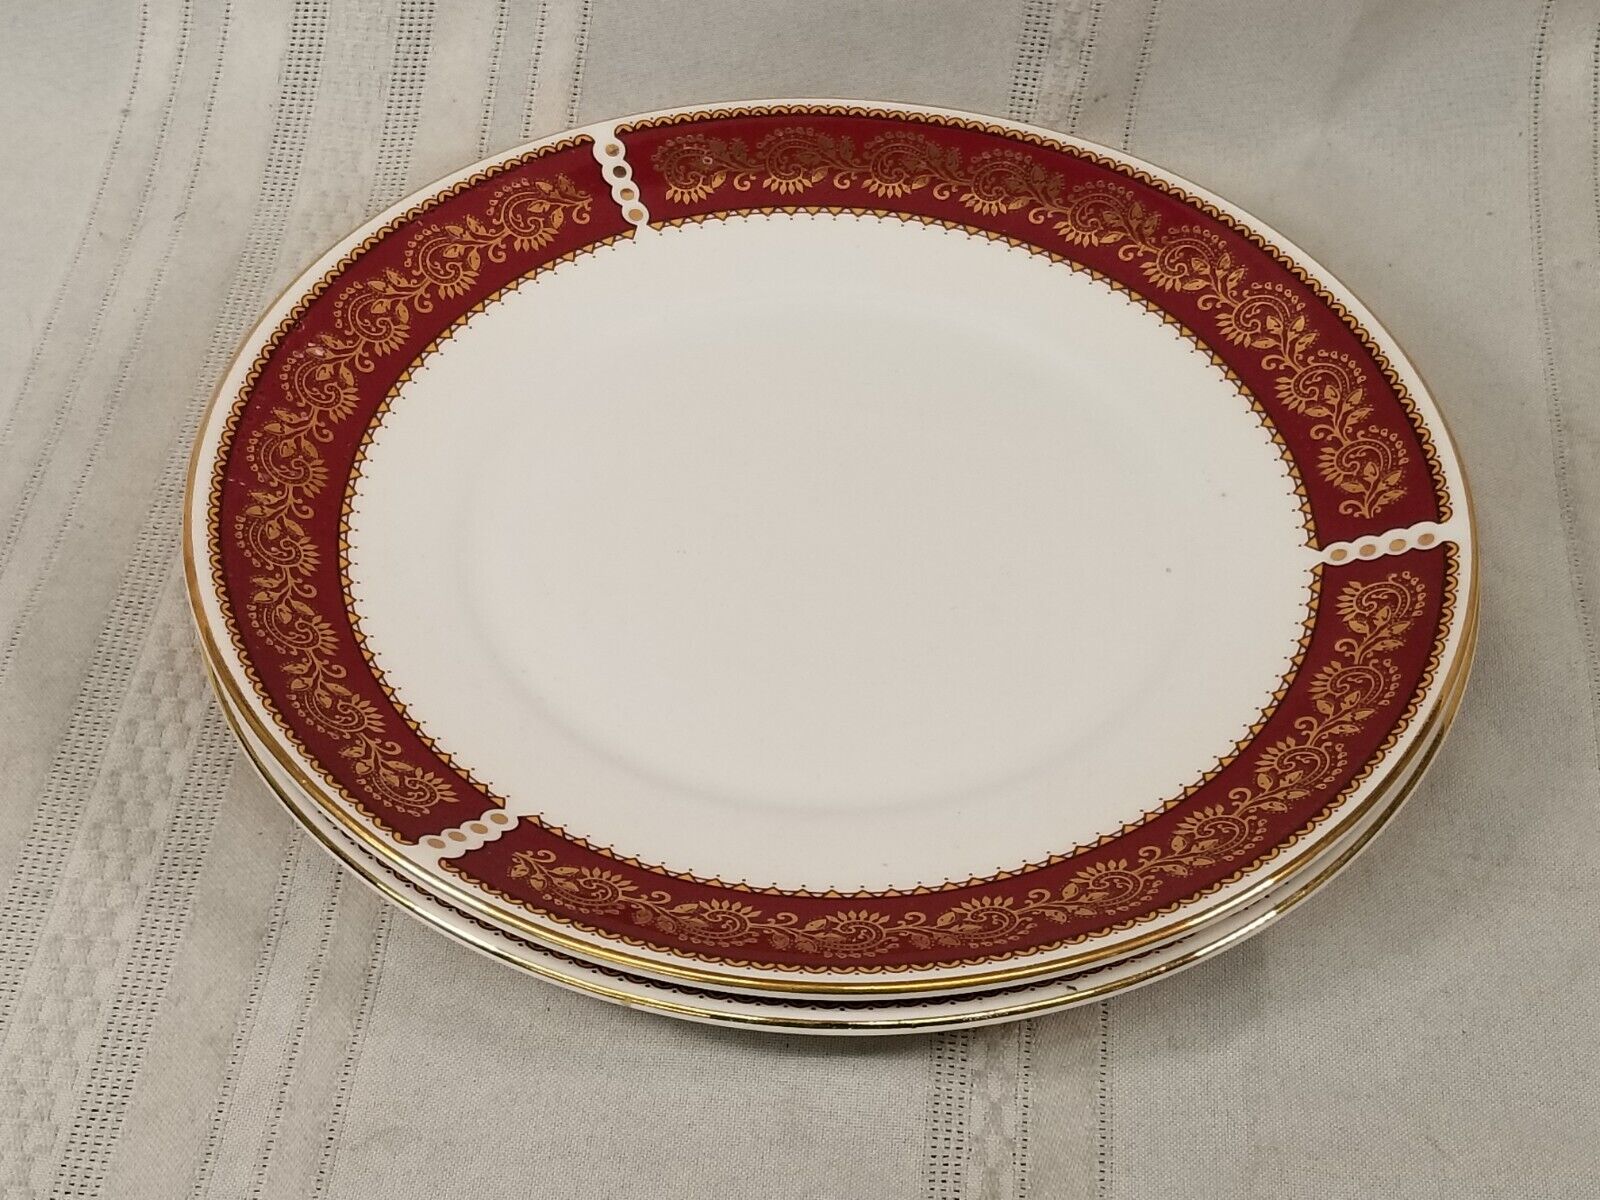 2 Burgundy Elizabethan Staffordshire China Dinner Plates